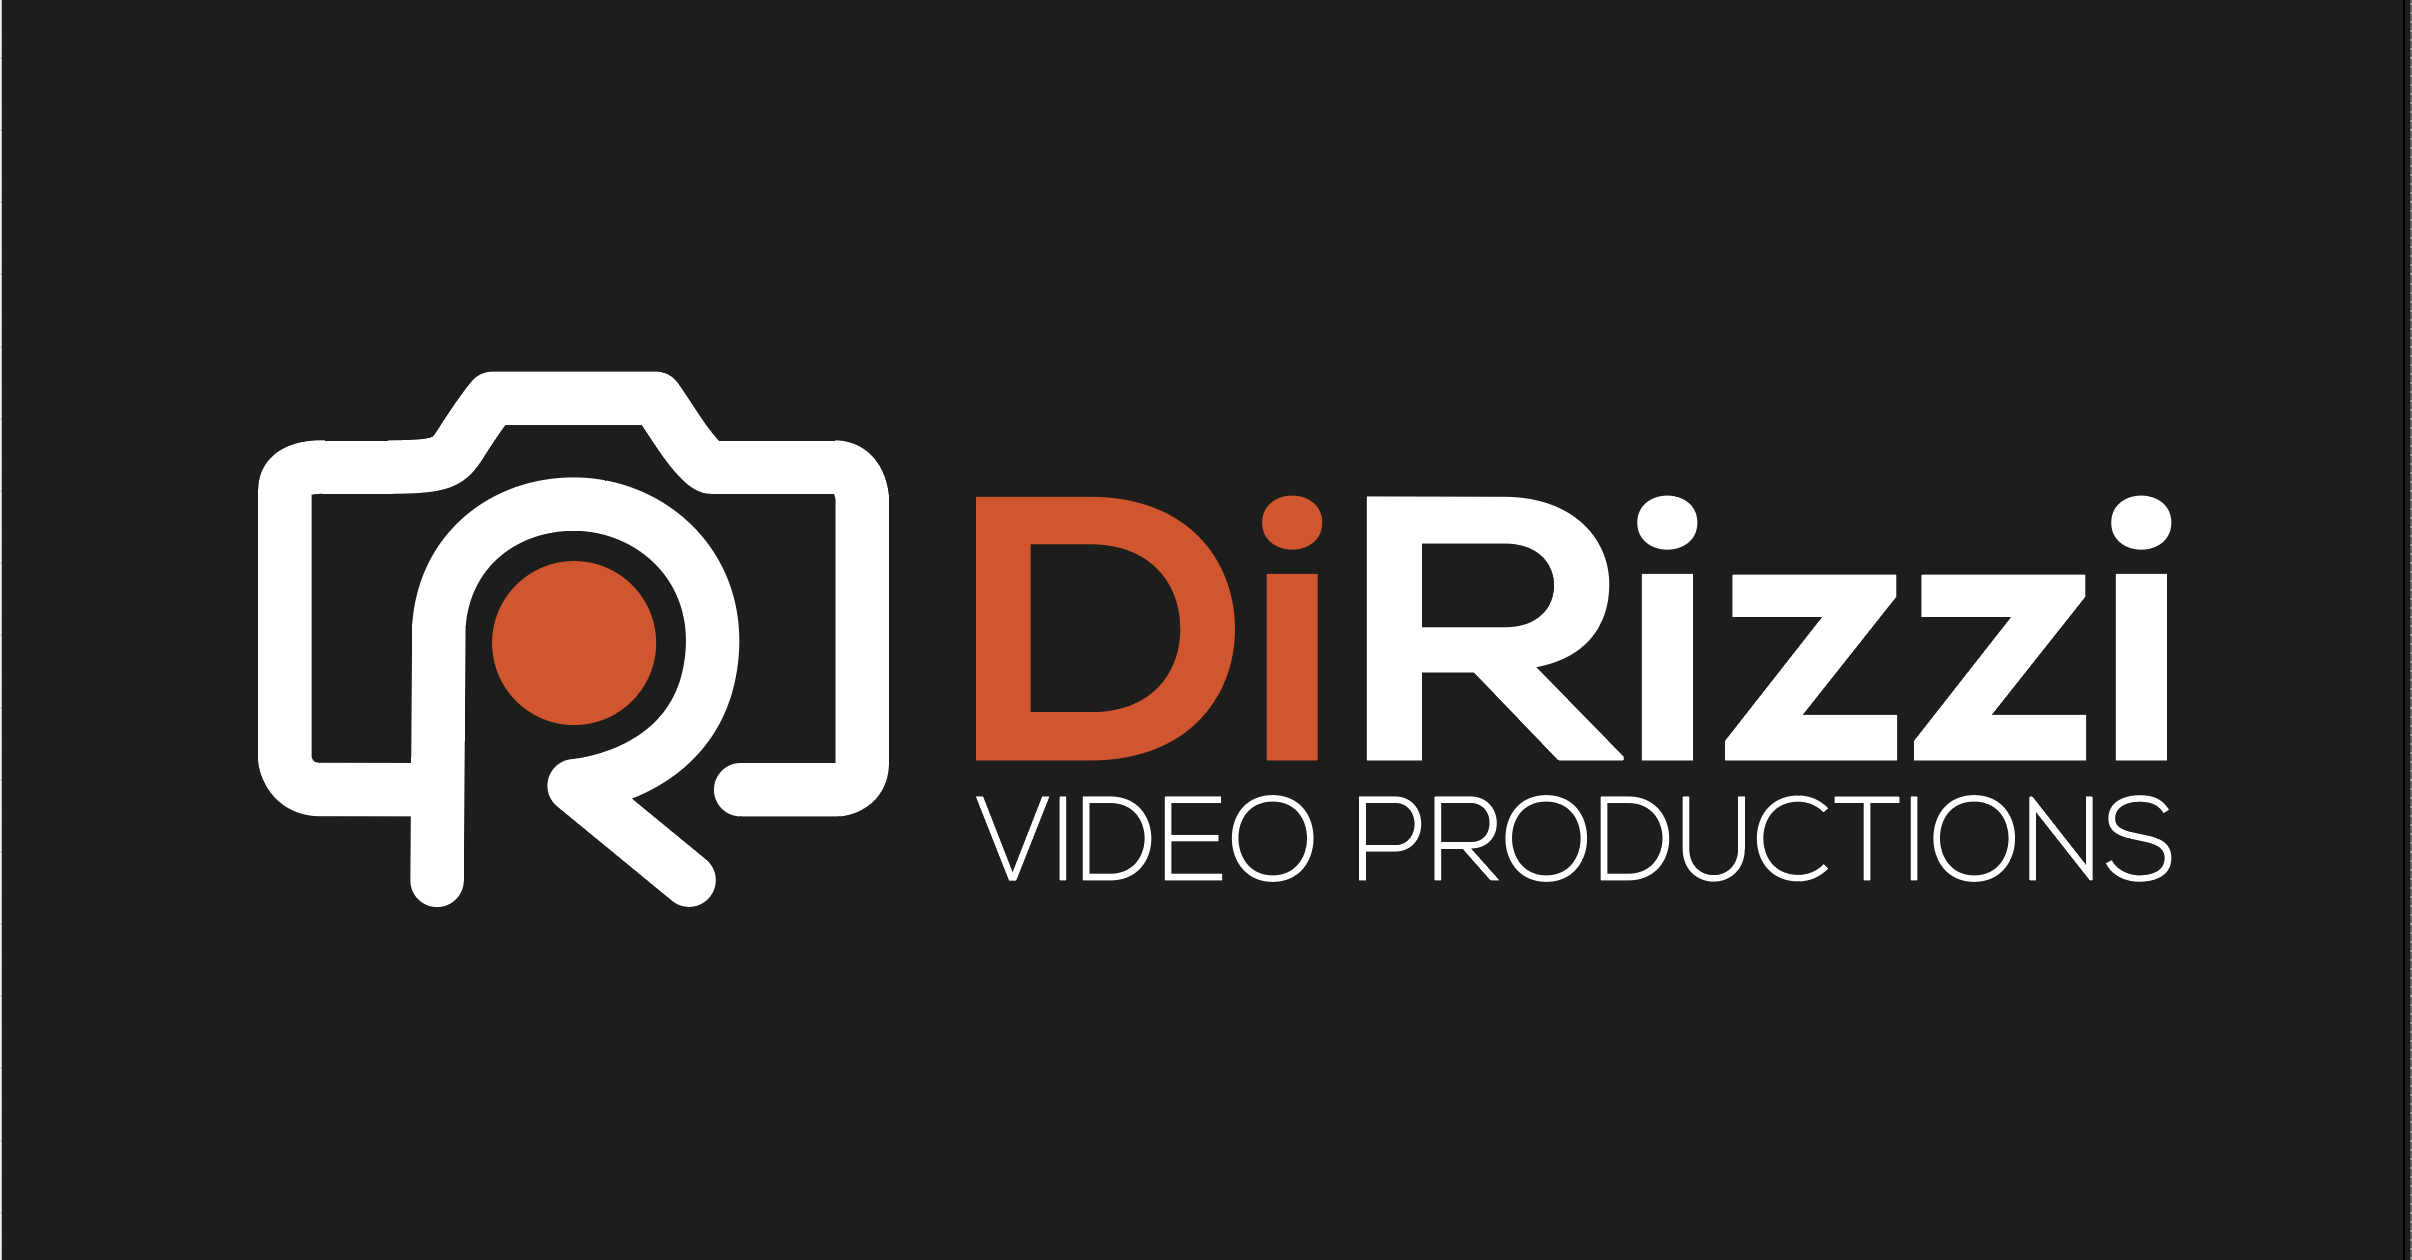 Show Reel - DiRizzi Video Productions